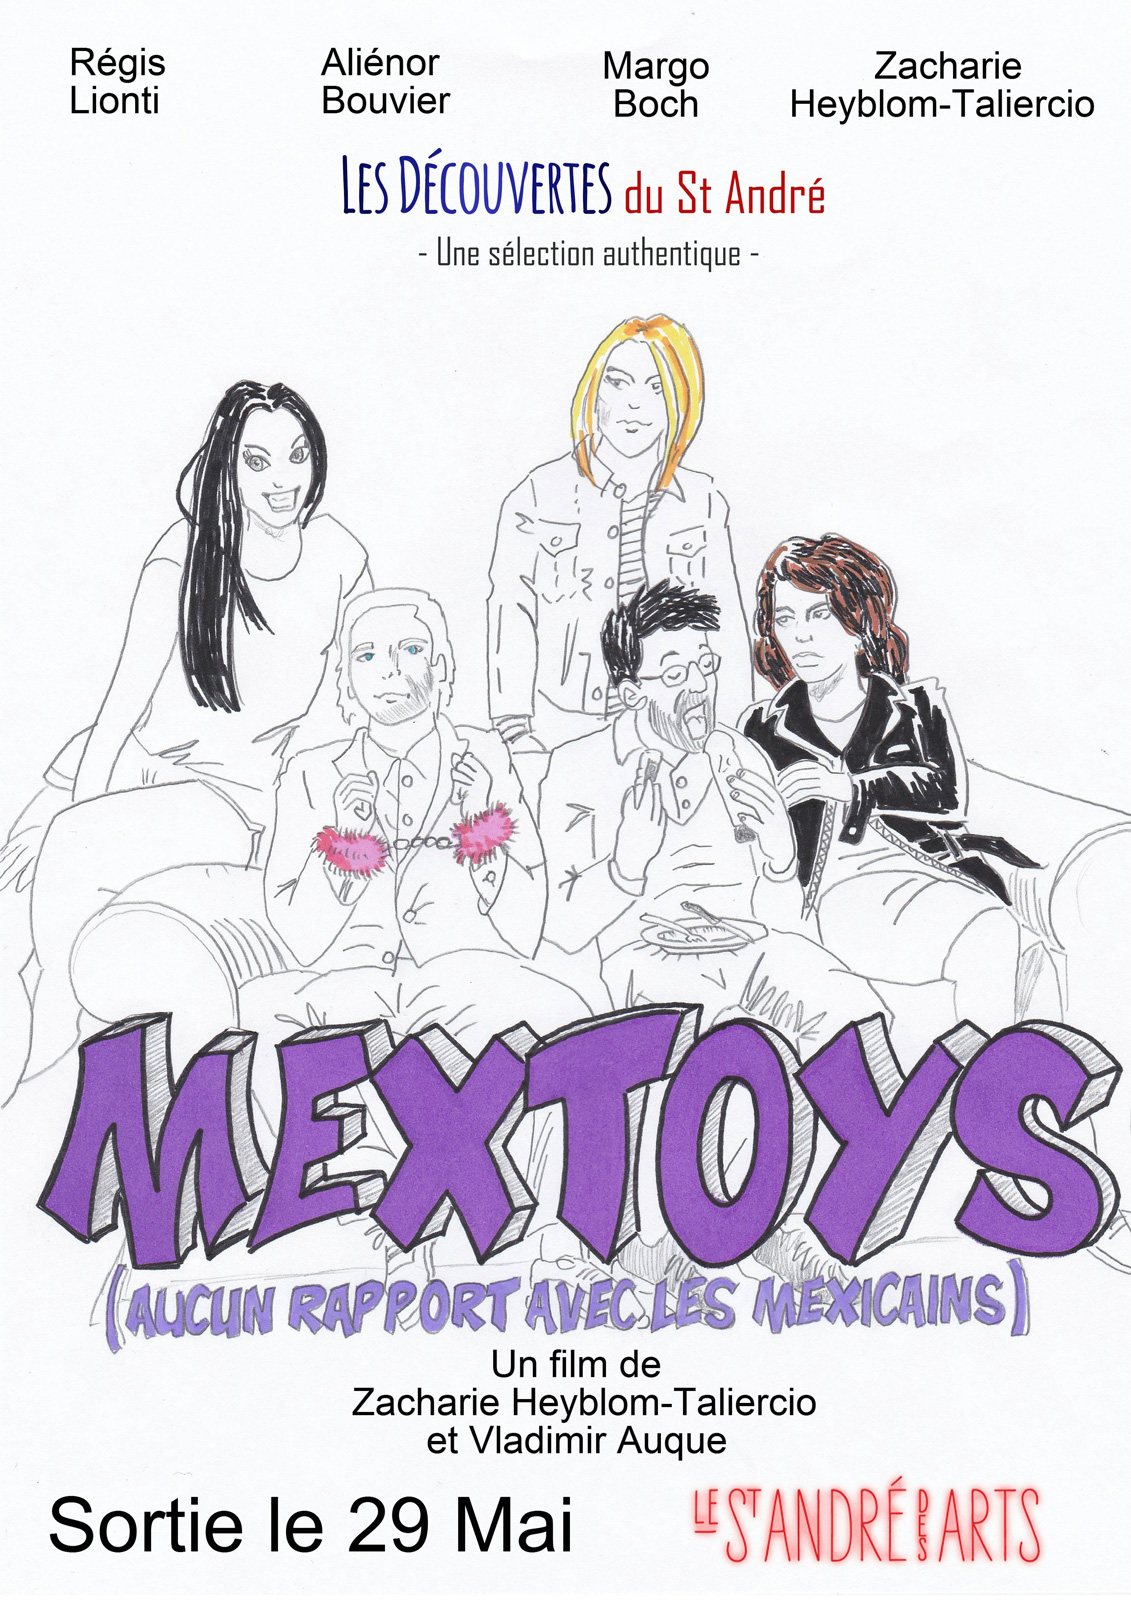 Mextoys (aucun rapport avec les Mexicains) streaming fr